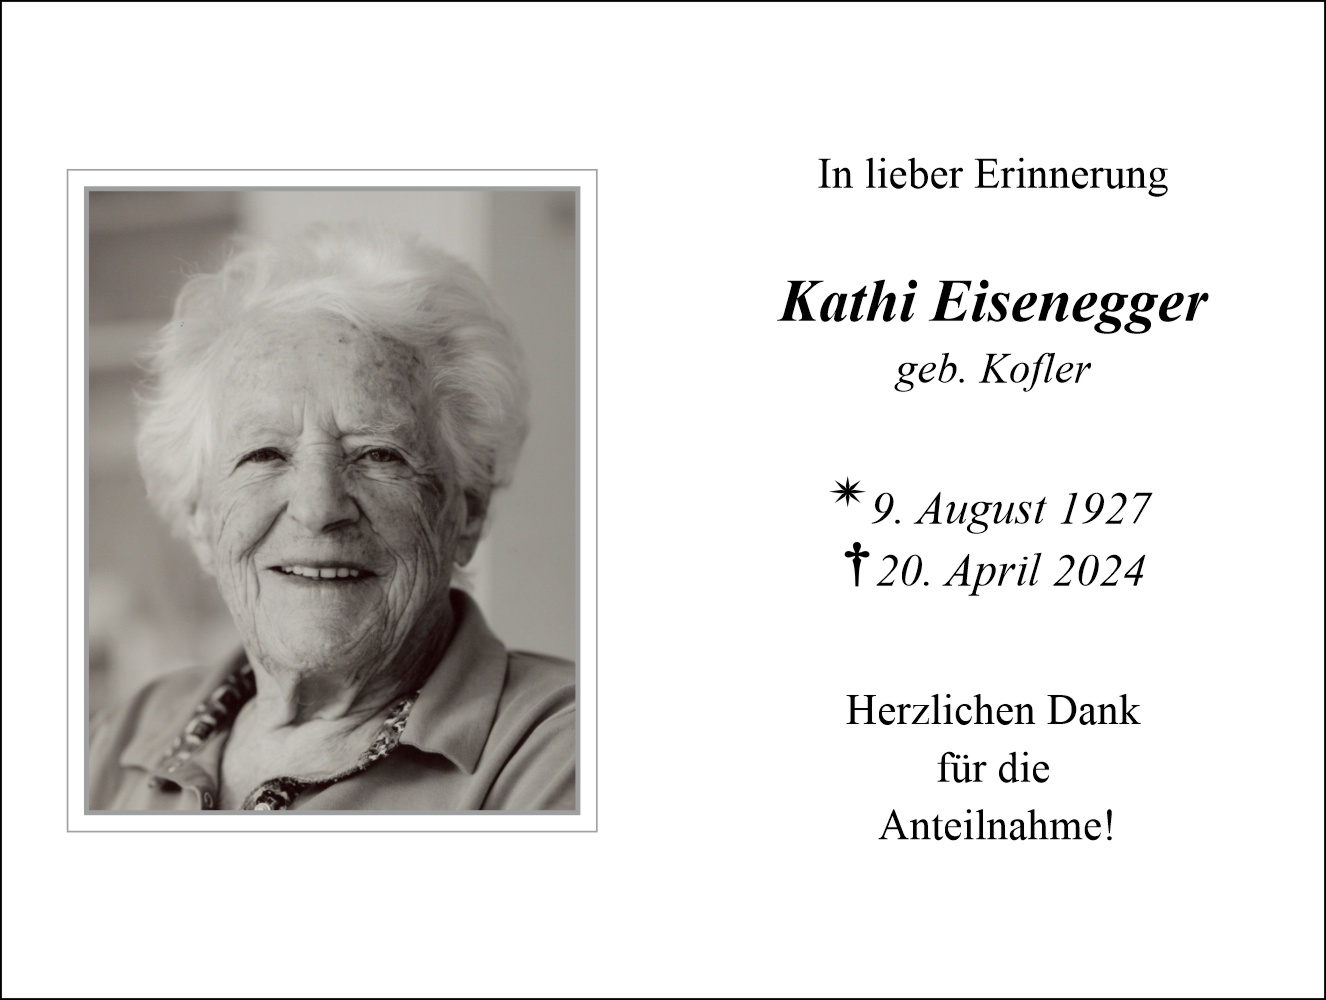 Kathi Eisenegger